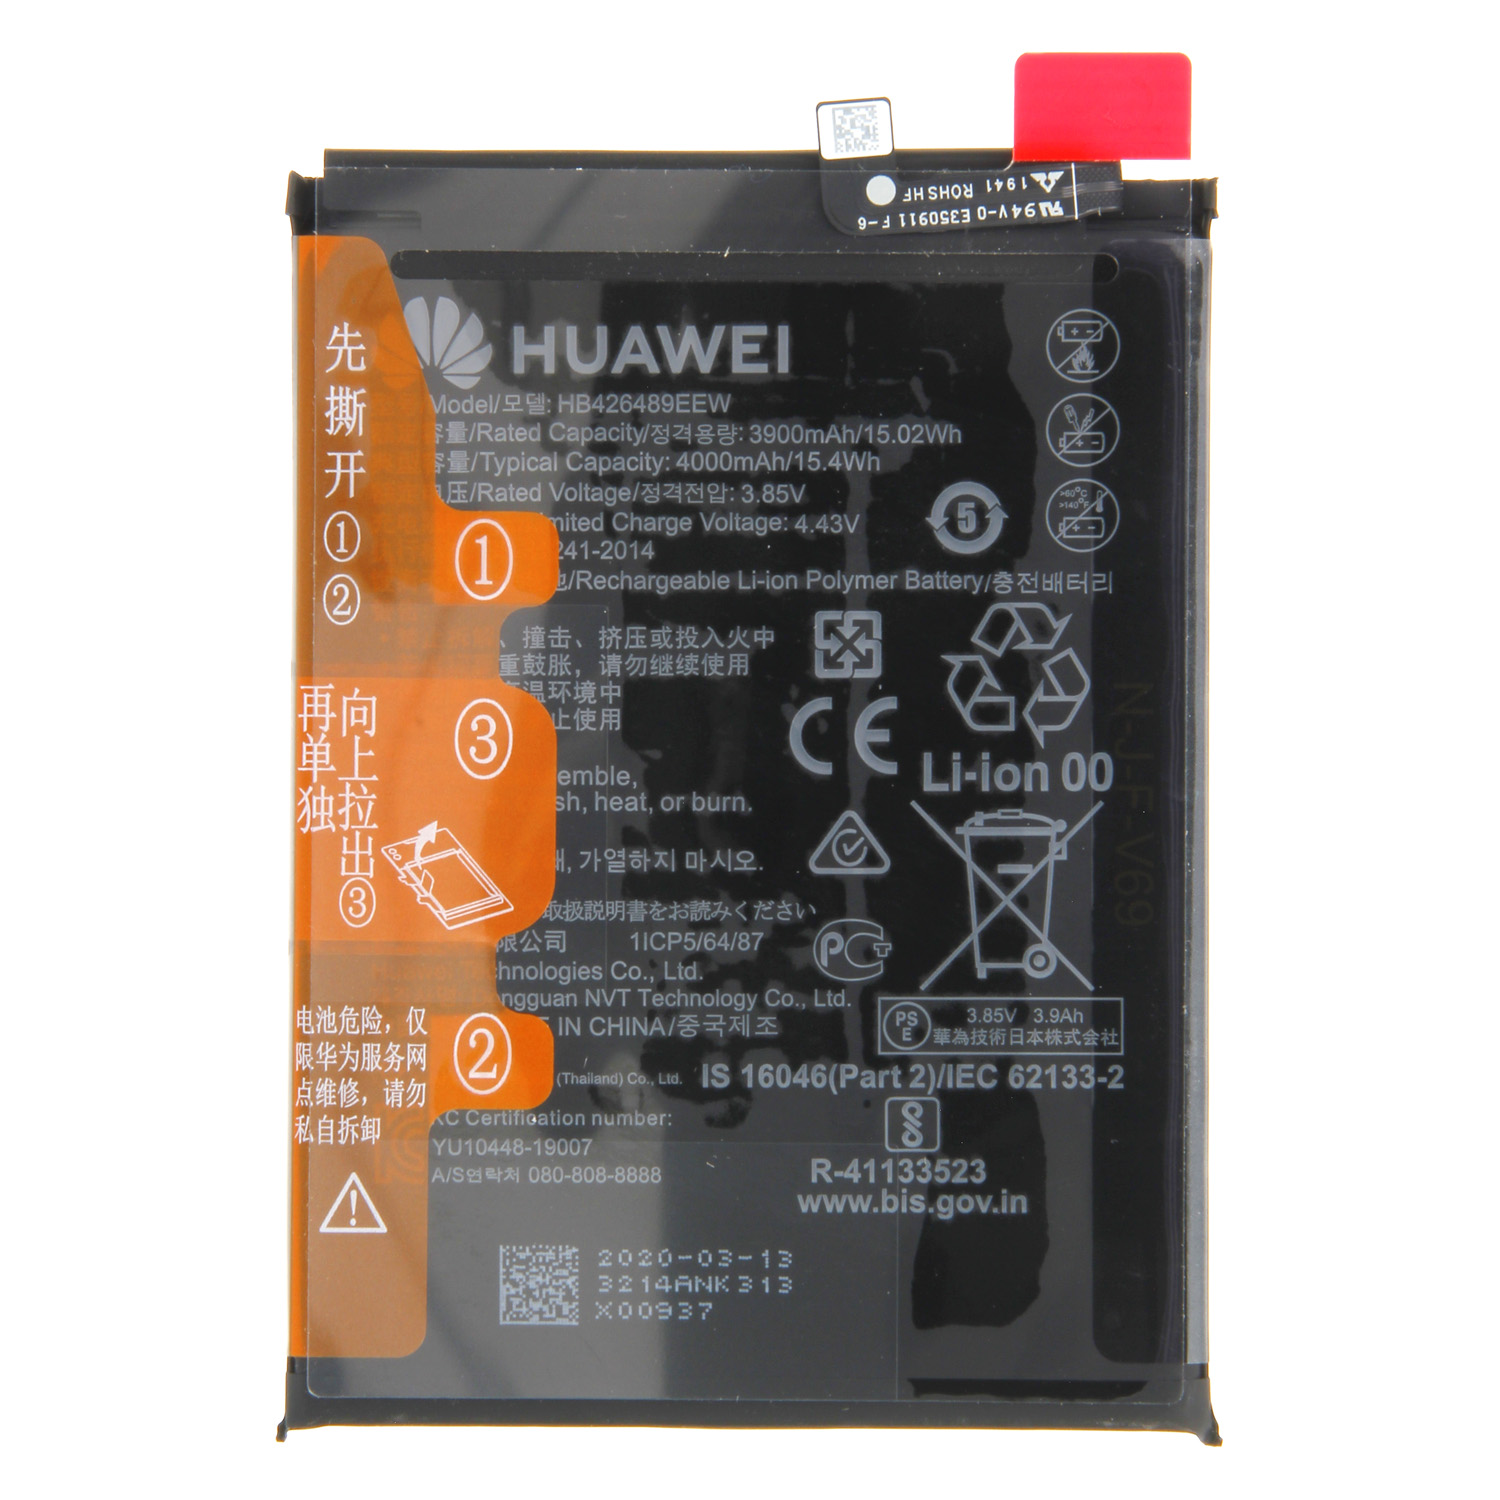 Huawei Y8P HB426489EEW (AQM-LX1) Battery BT126